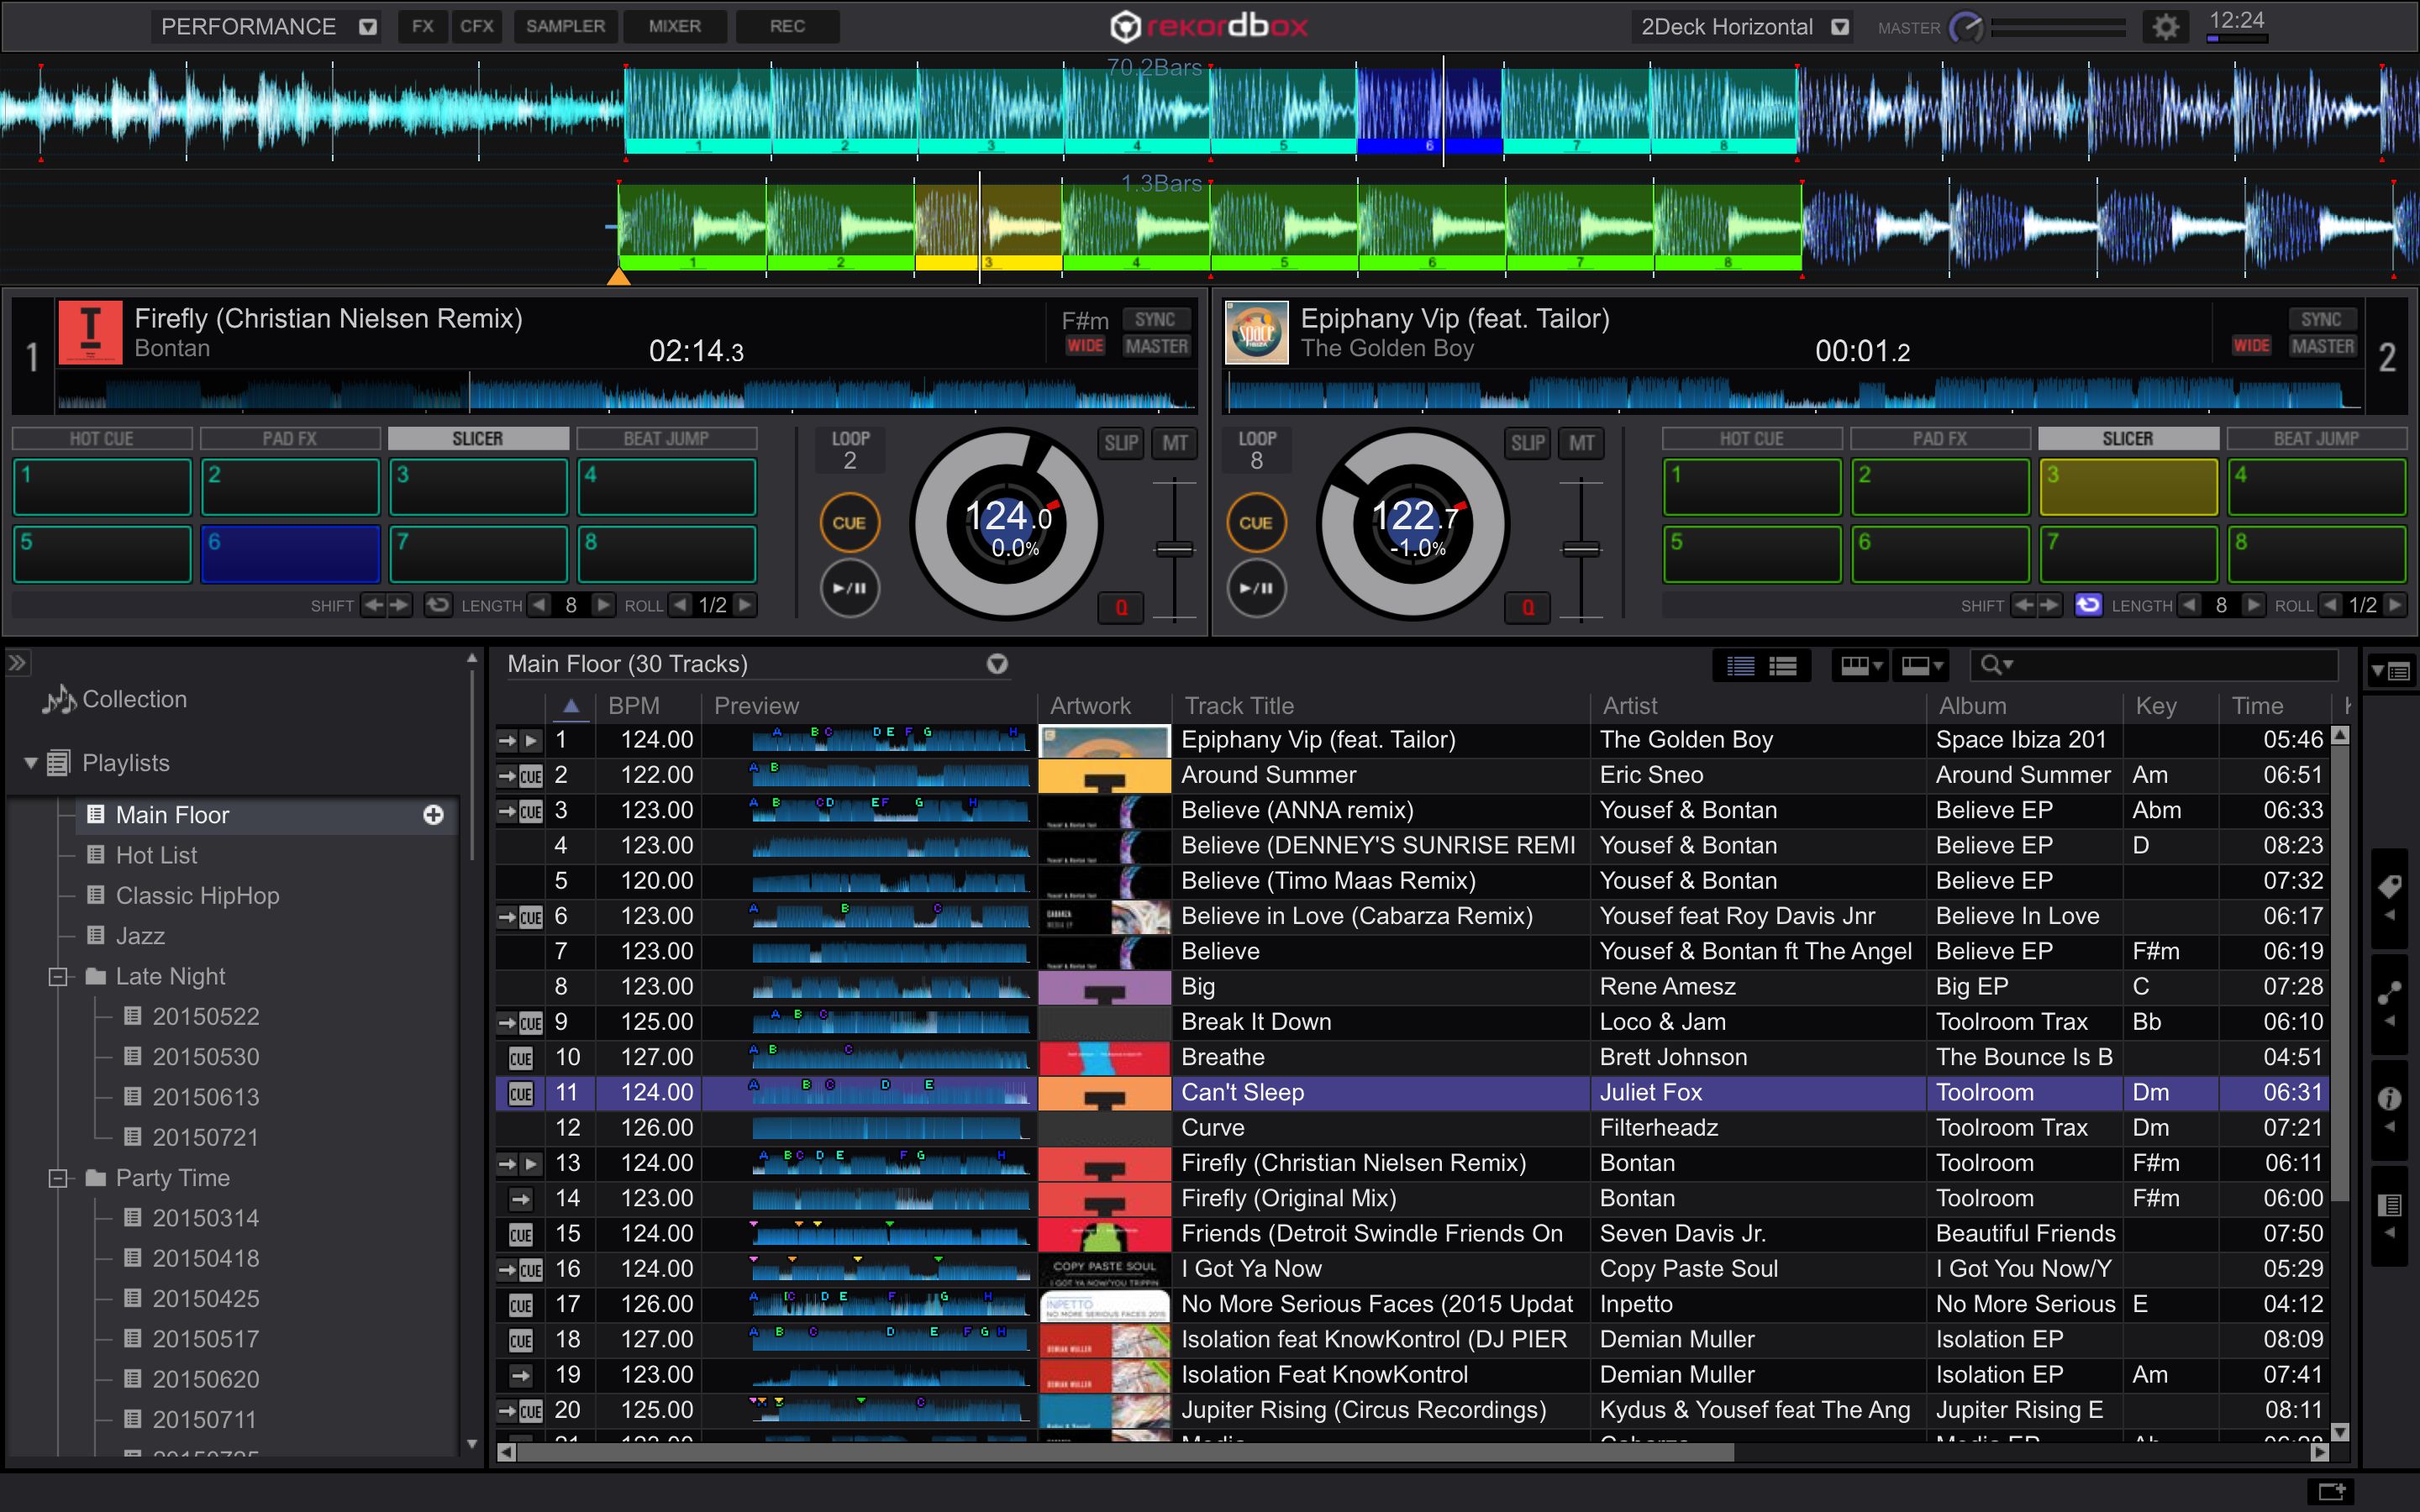 Pioneer DJ rekordbox 6.7.4 for ios instal